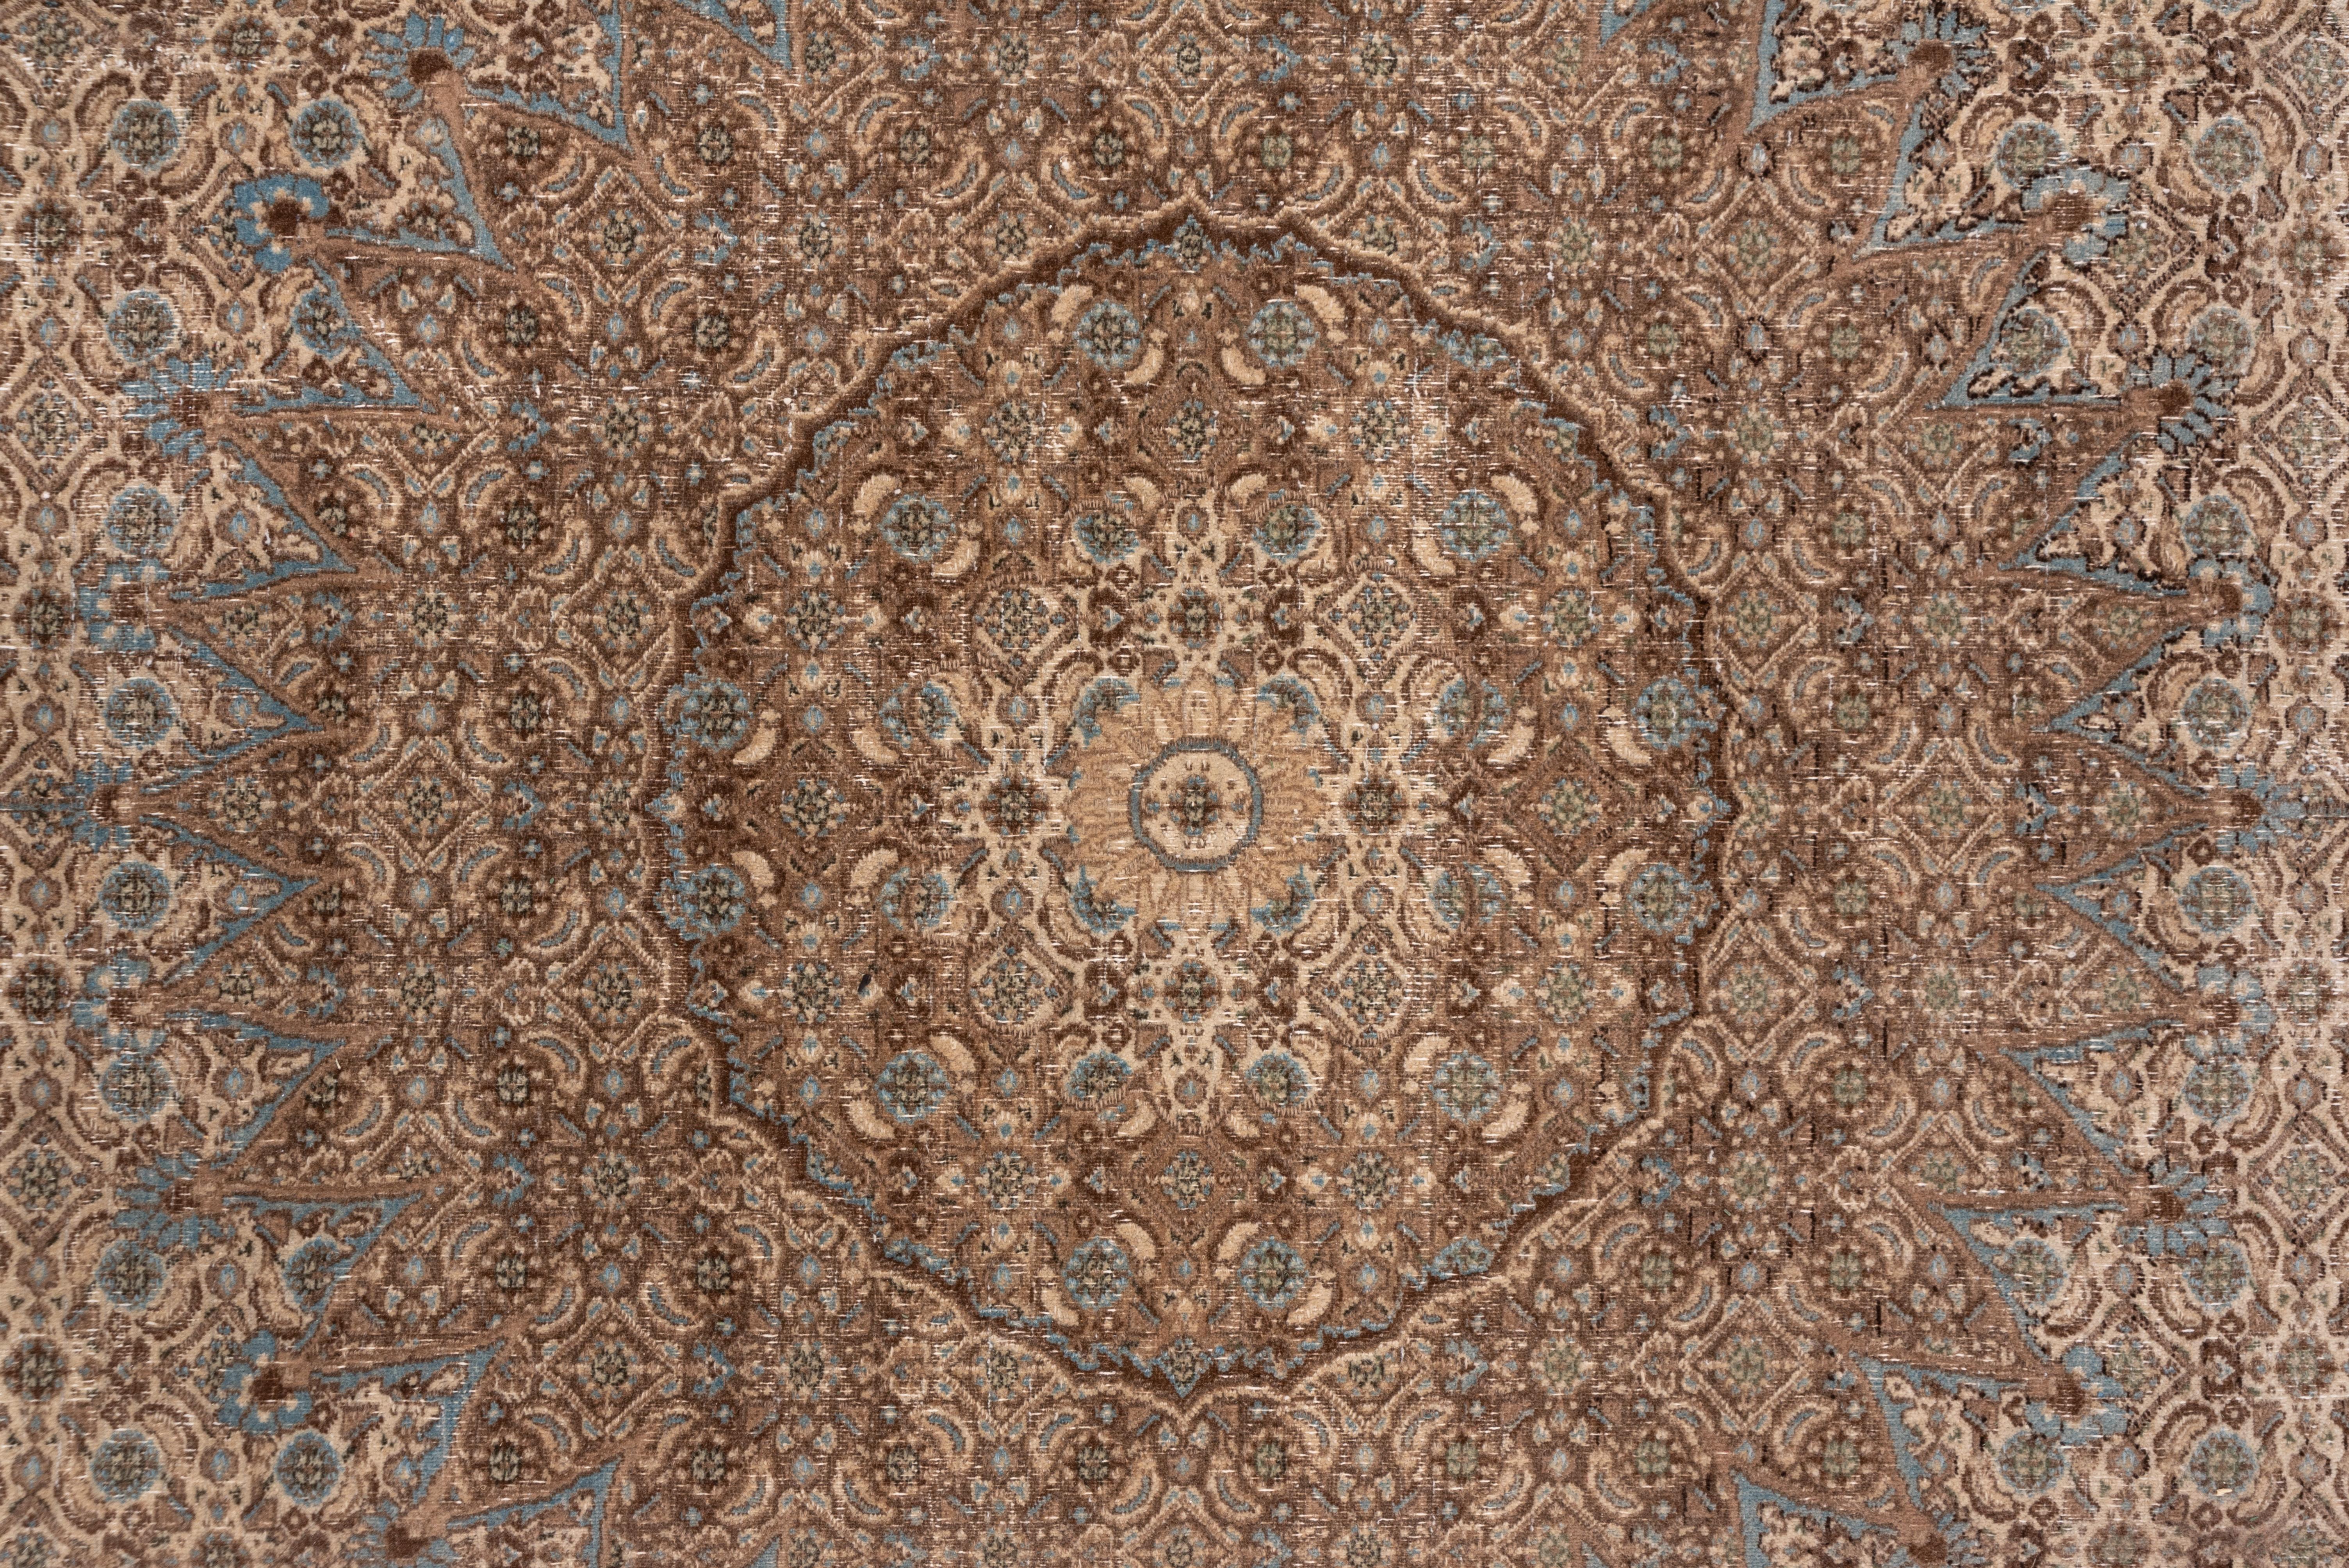 Hand-Knotted Antique Turkish Sivas Carpet, Center Medallion, Brown and Light Blue Palette For Sale